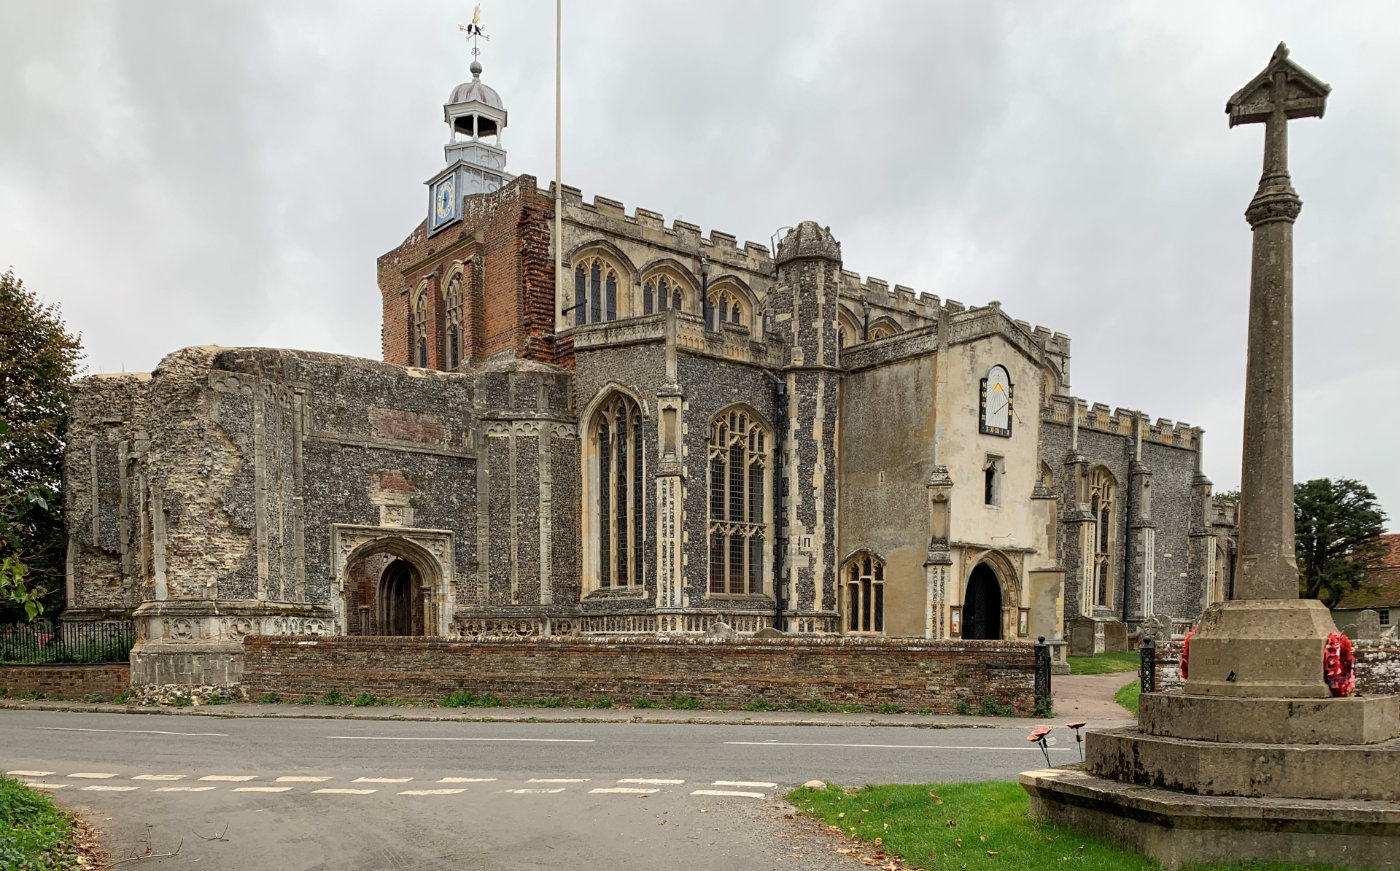 St Mary’s Church, East Bergholt, Suffolk